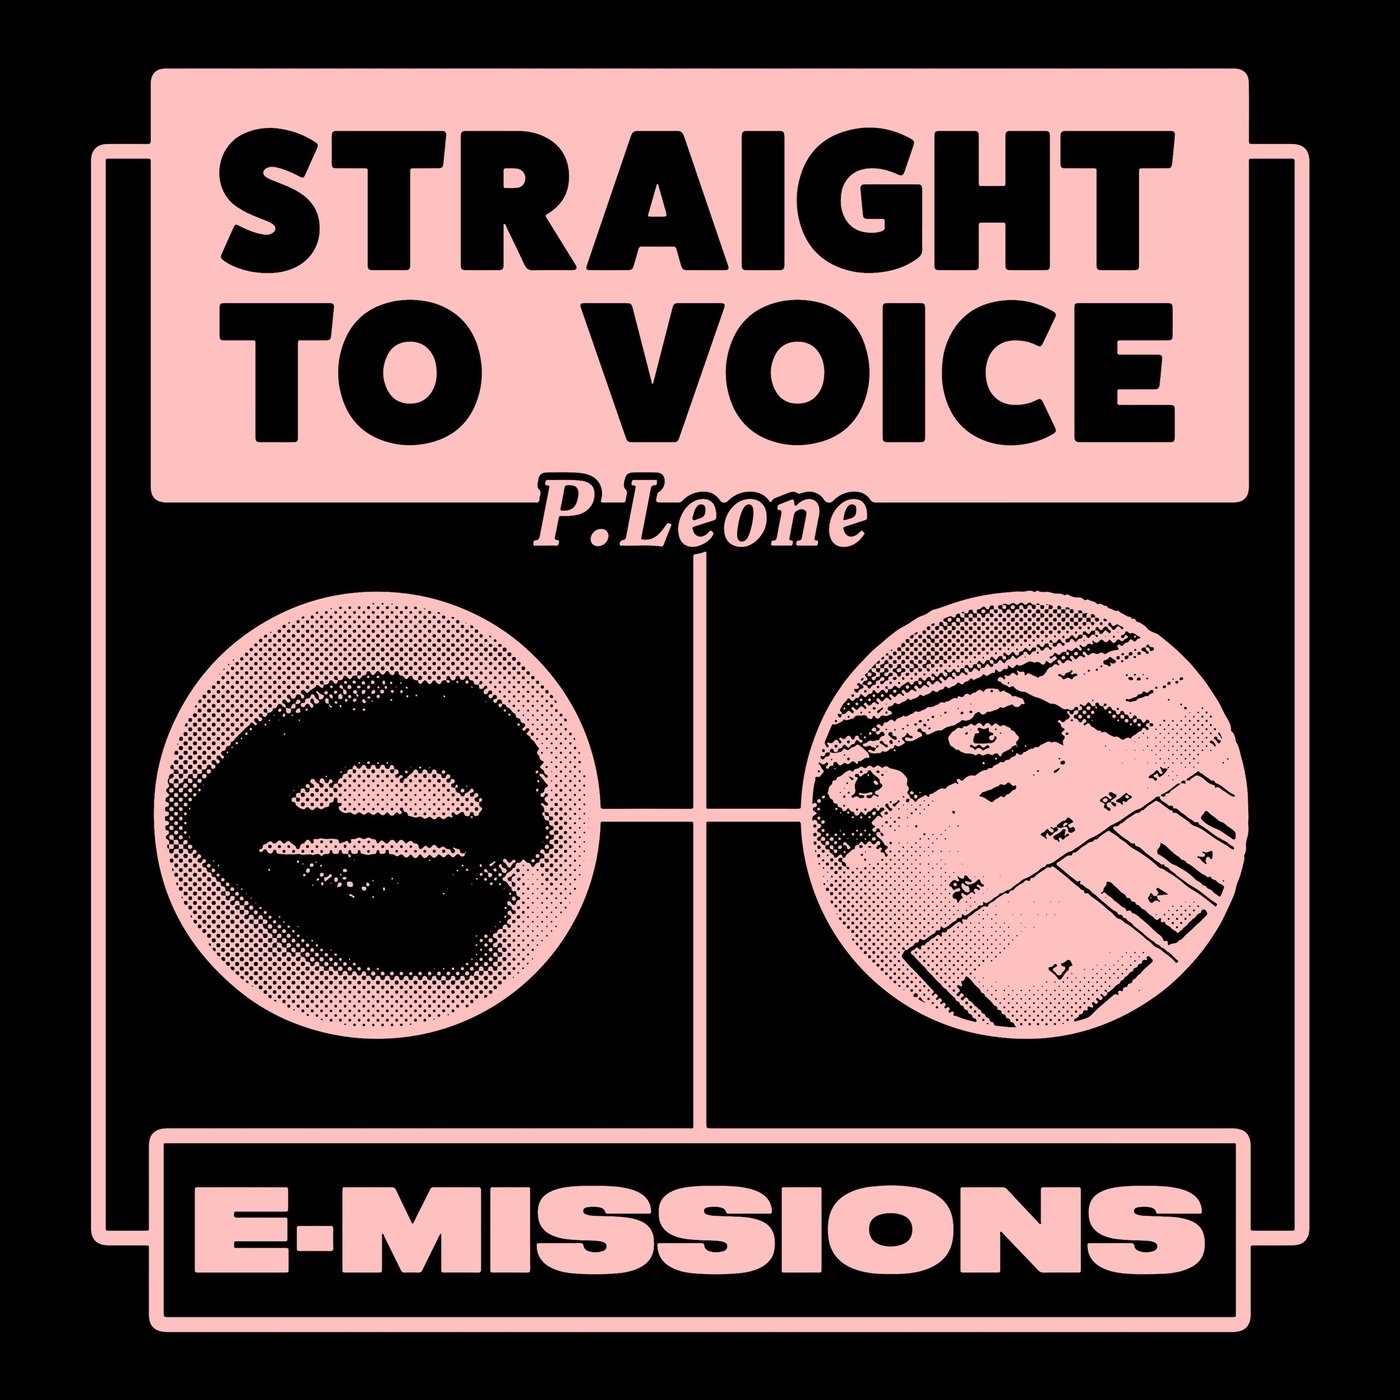 image cover: P.leone - Straight To Voice / E-Missions